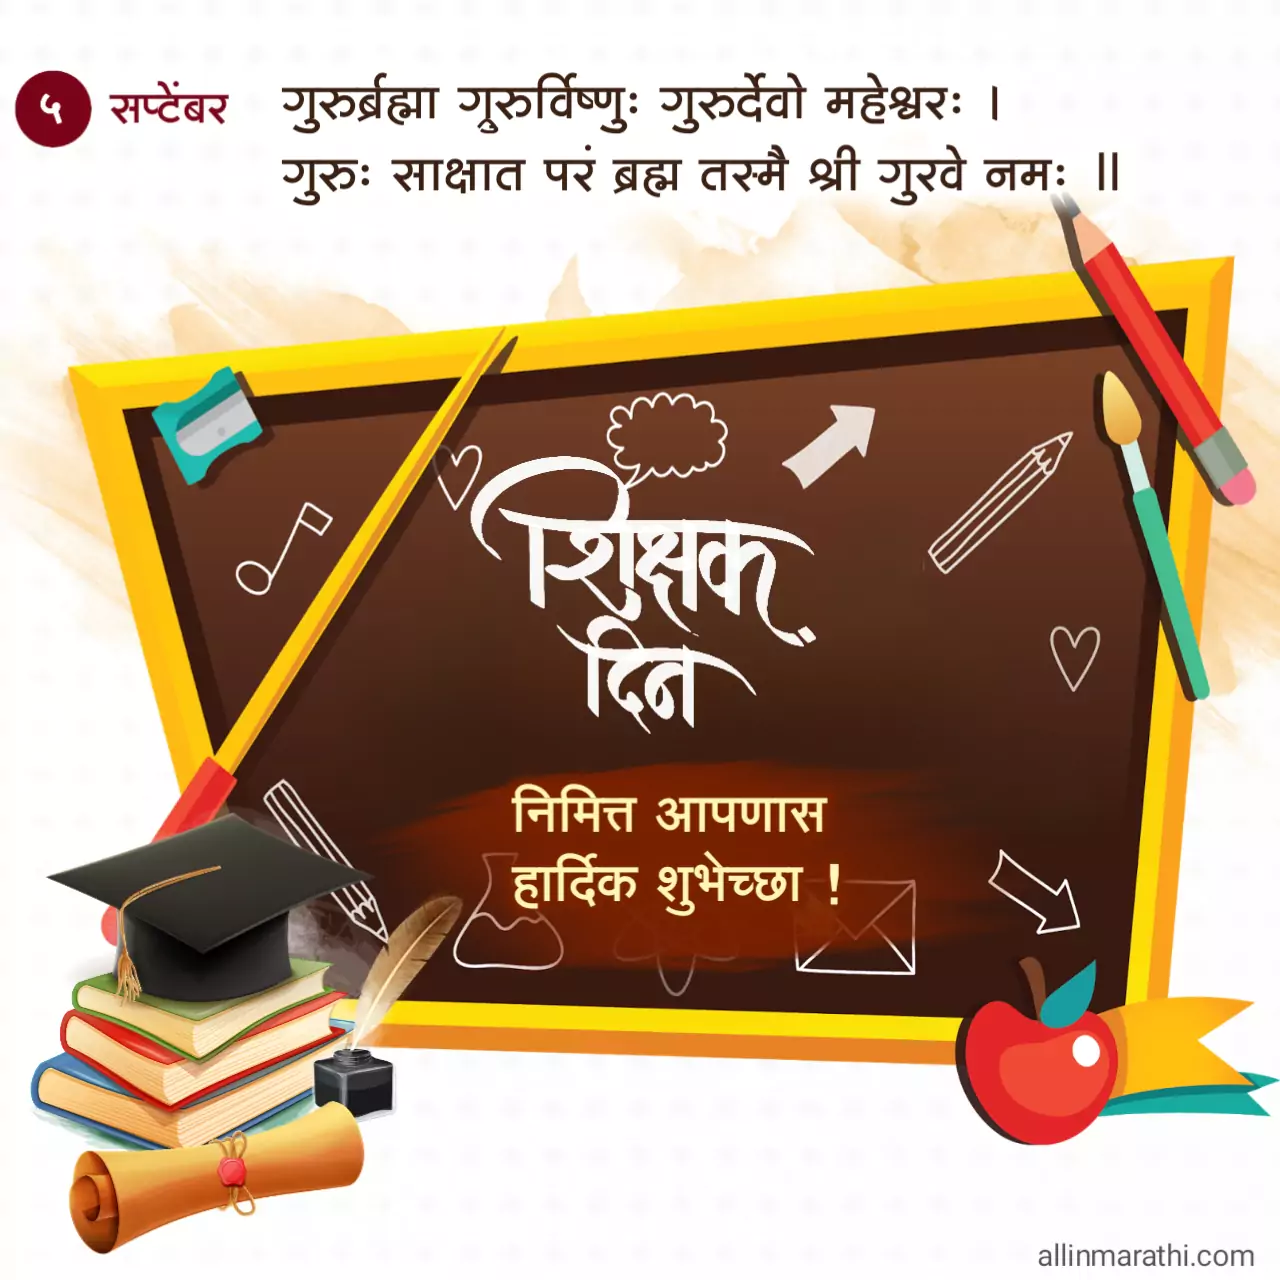 Teachers day wishes in marathi, शिक्षक दिन शुभेच्छा मराठी